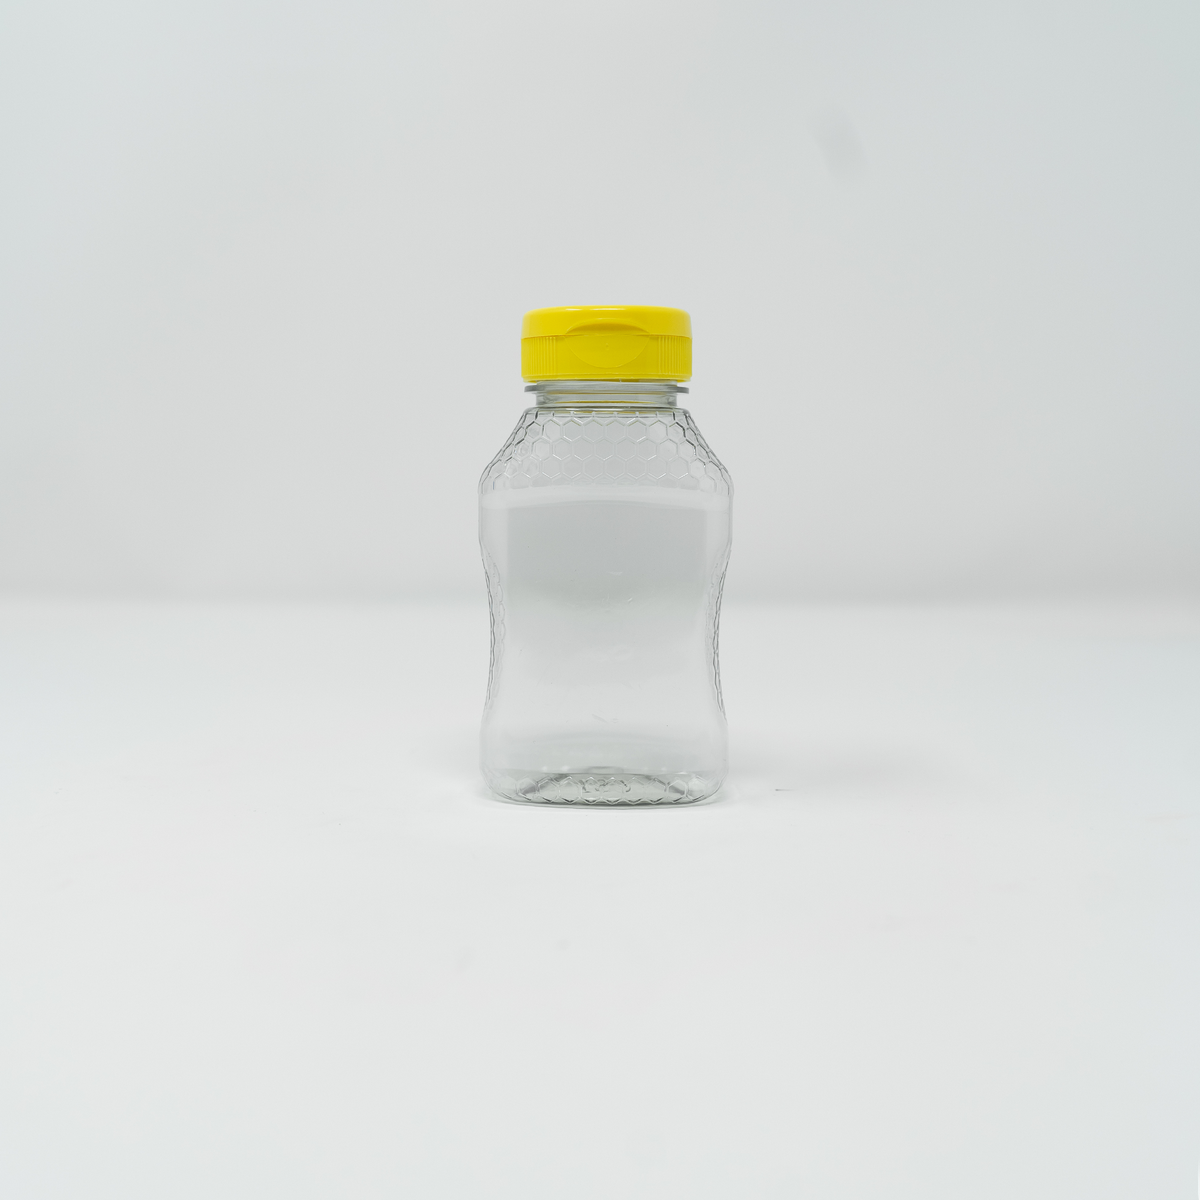 8 oz Honeycomb Bottles - 24 Pack